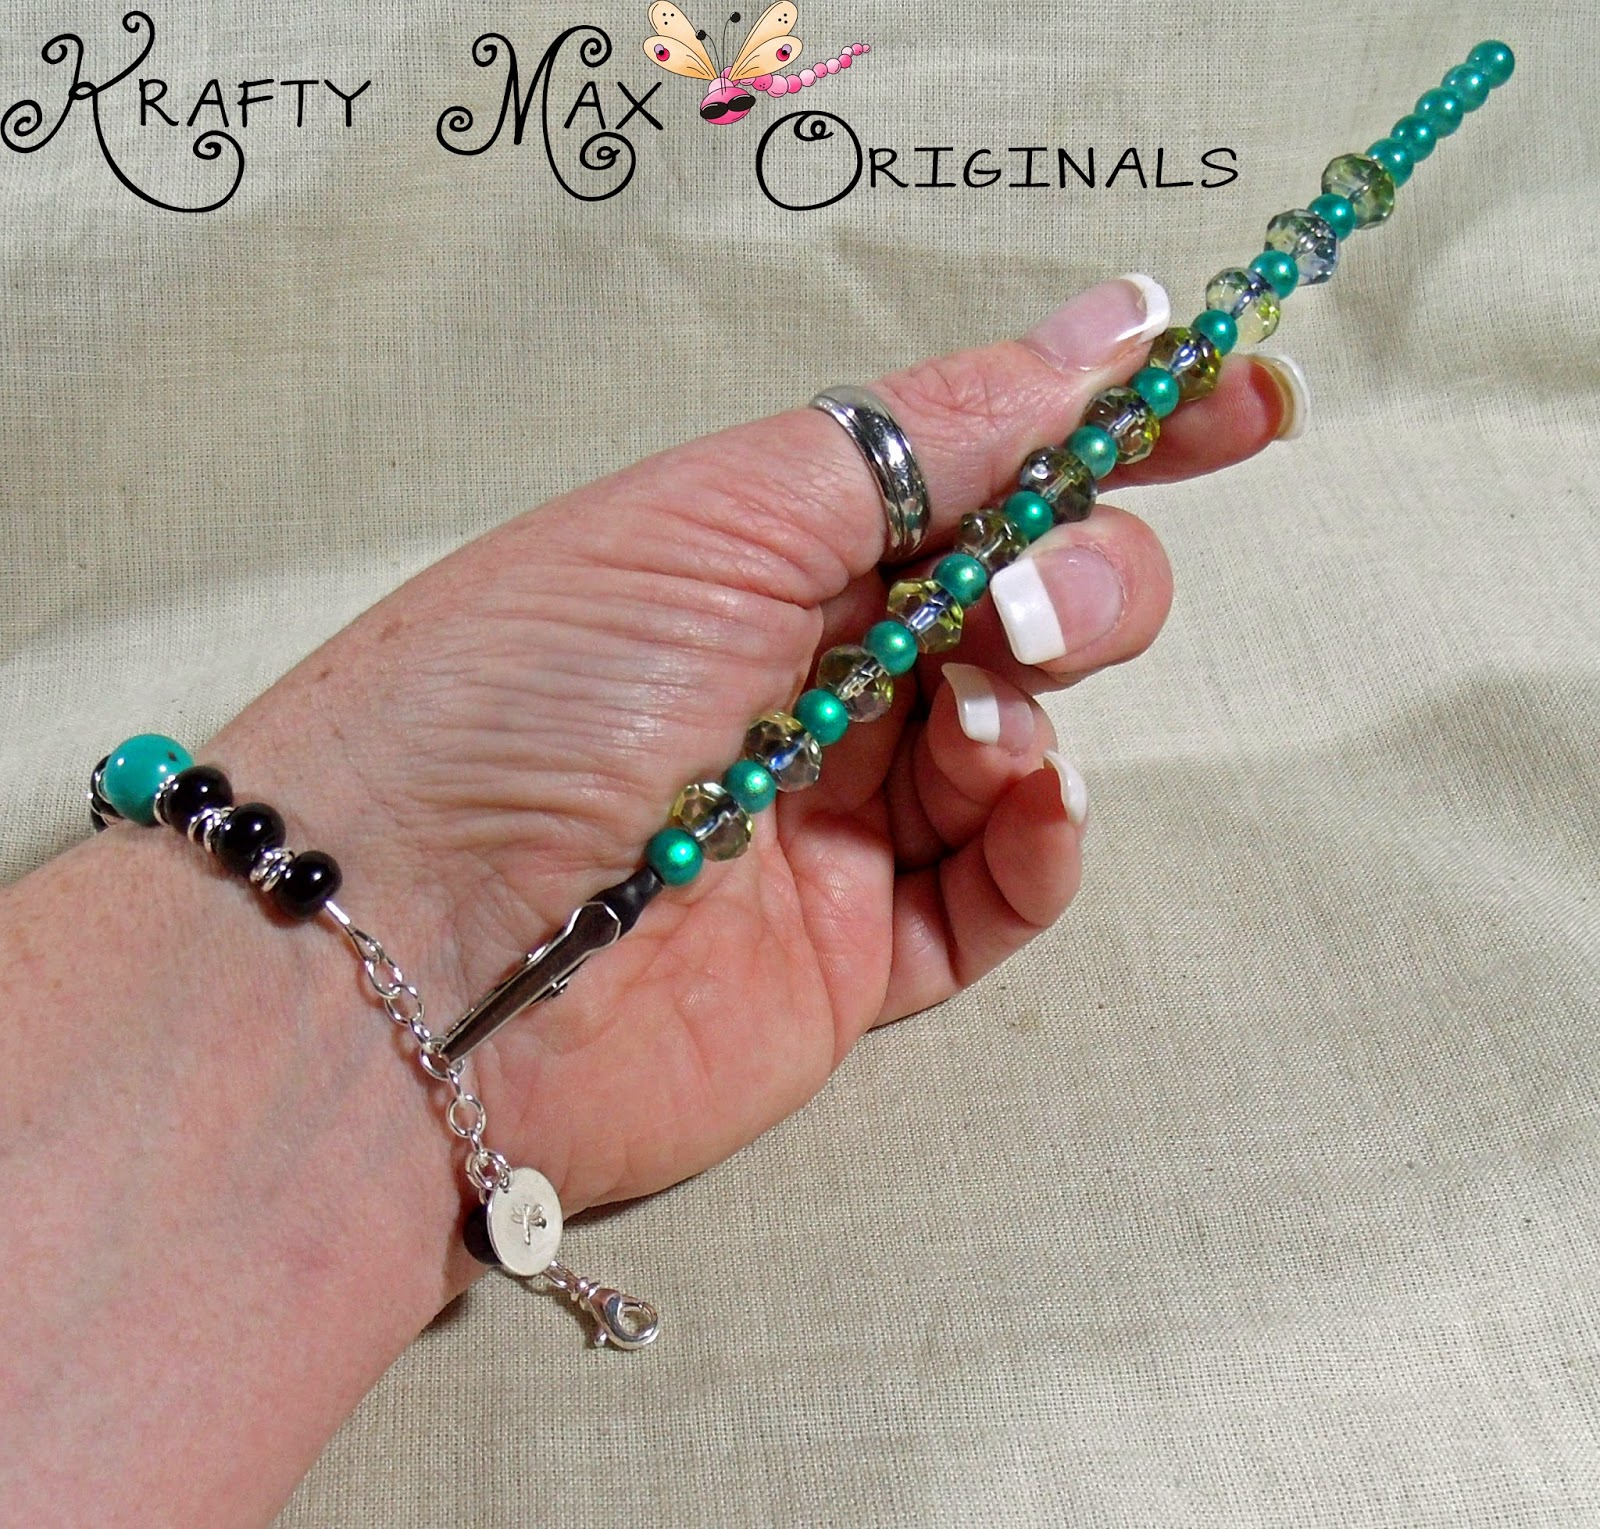 http://www.artfire.com/ext/shop/product_view/KraftyMax/10017611/green_miracle_beads_-_no_husband_needed_klasp_helper/handmade/accessories